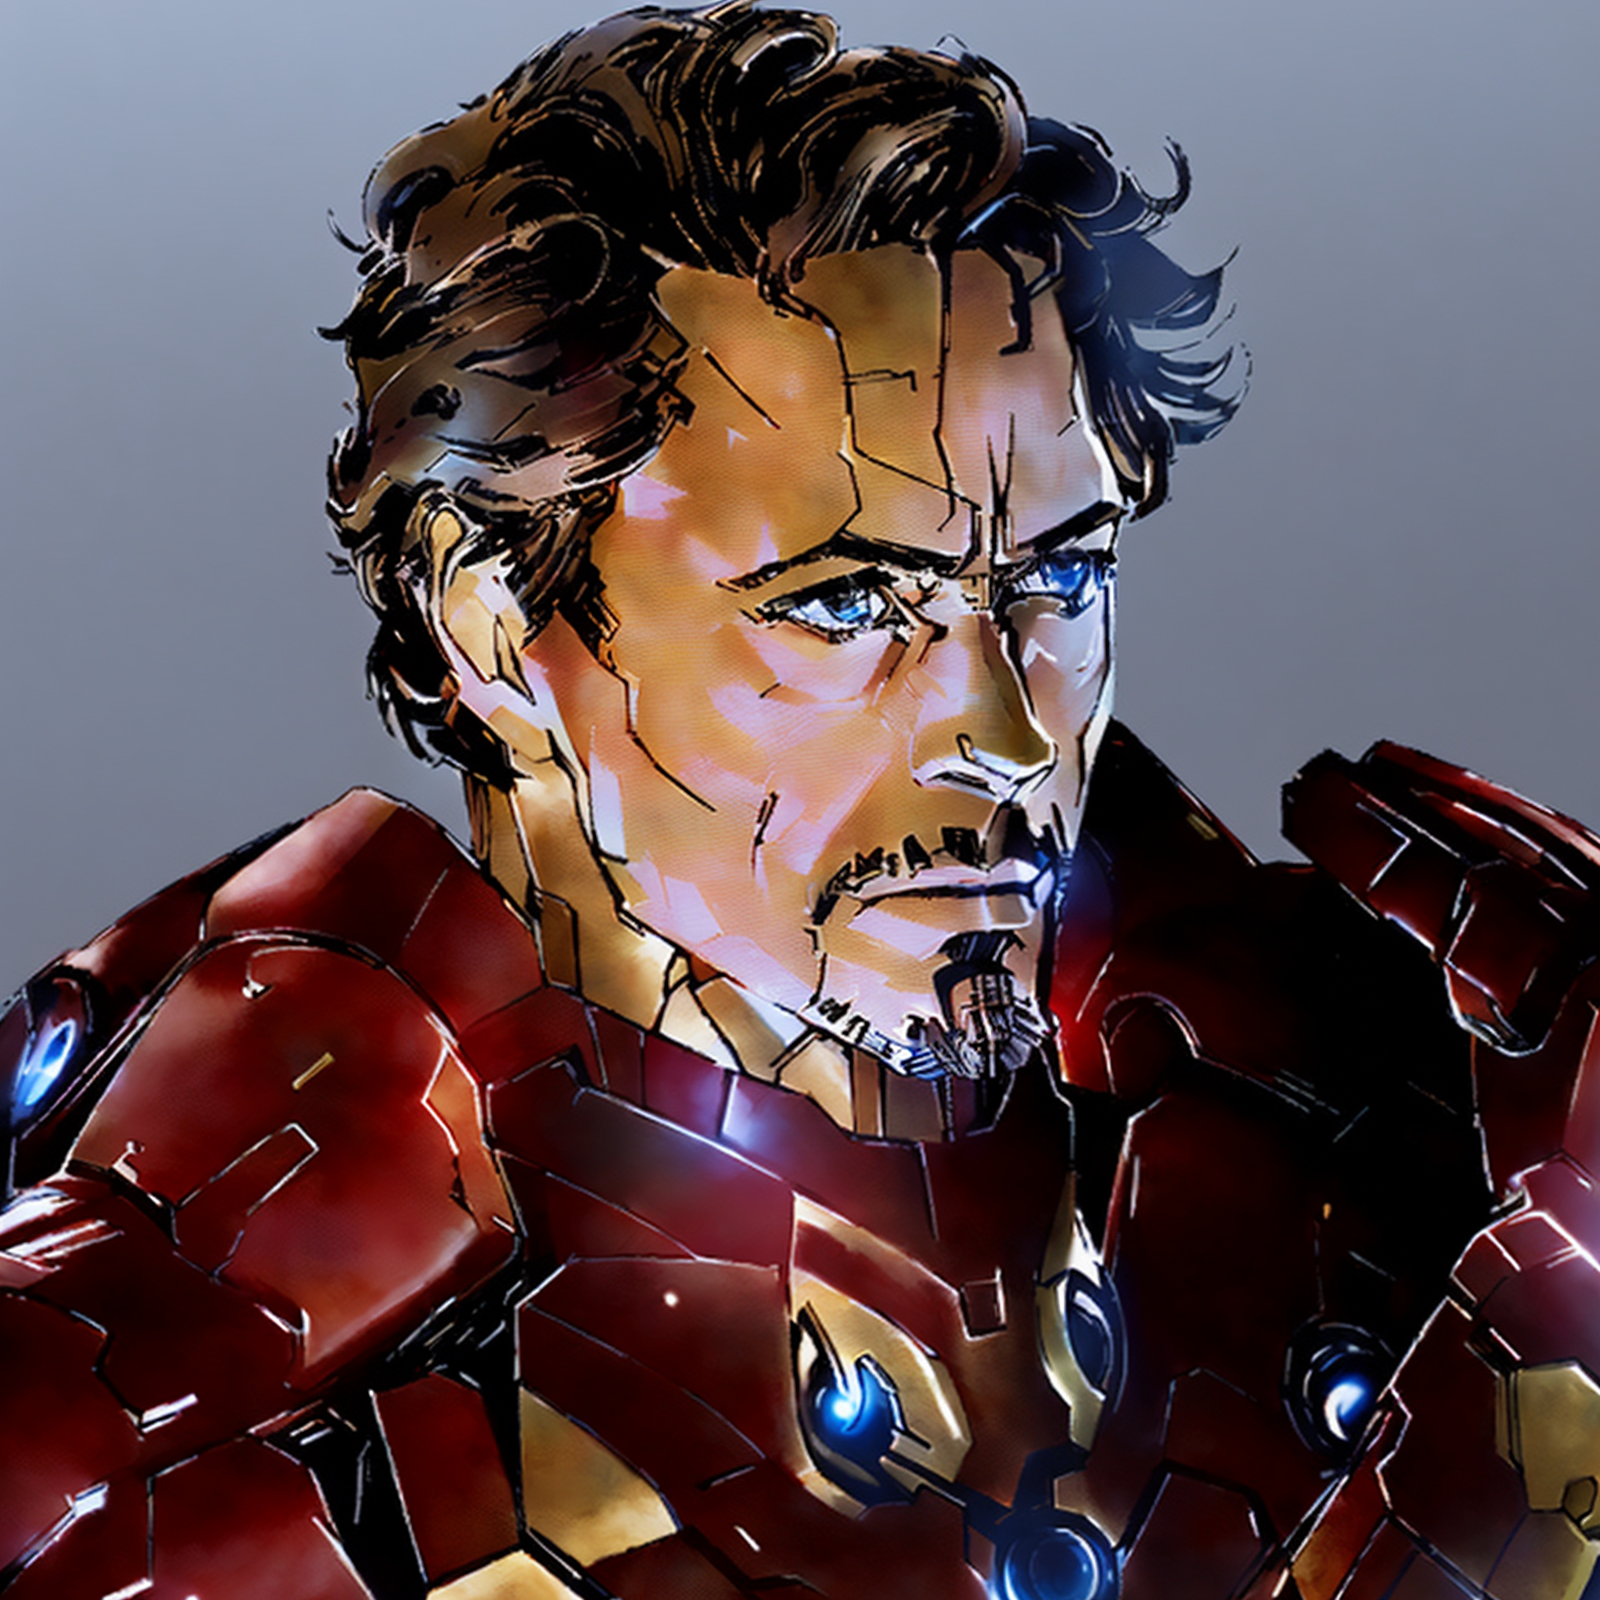 yoshin style, Robert Downey Jr as Iron Man, mecha suit, by Yoji Shinkawa